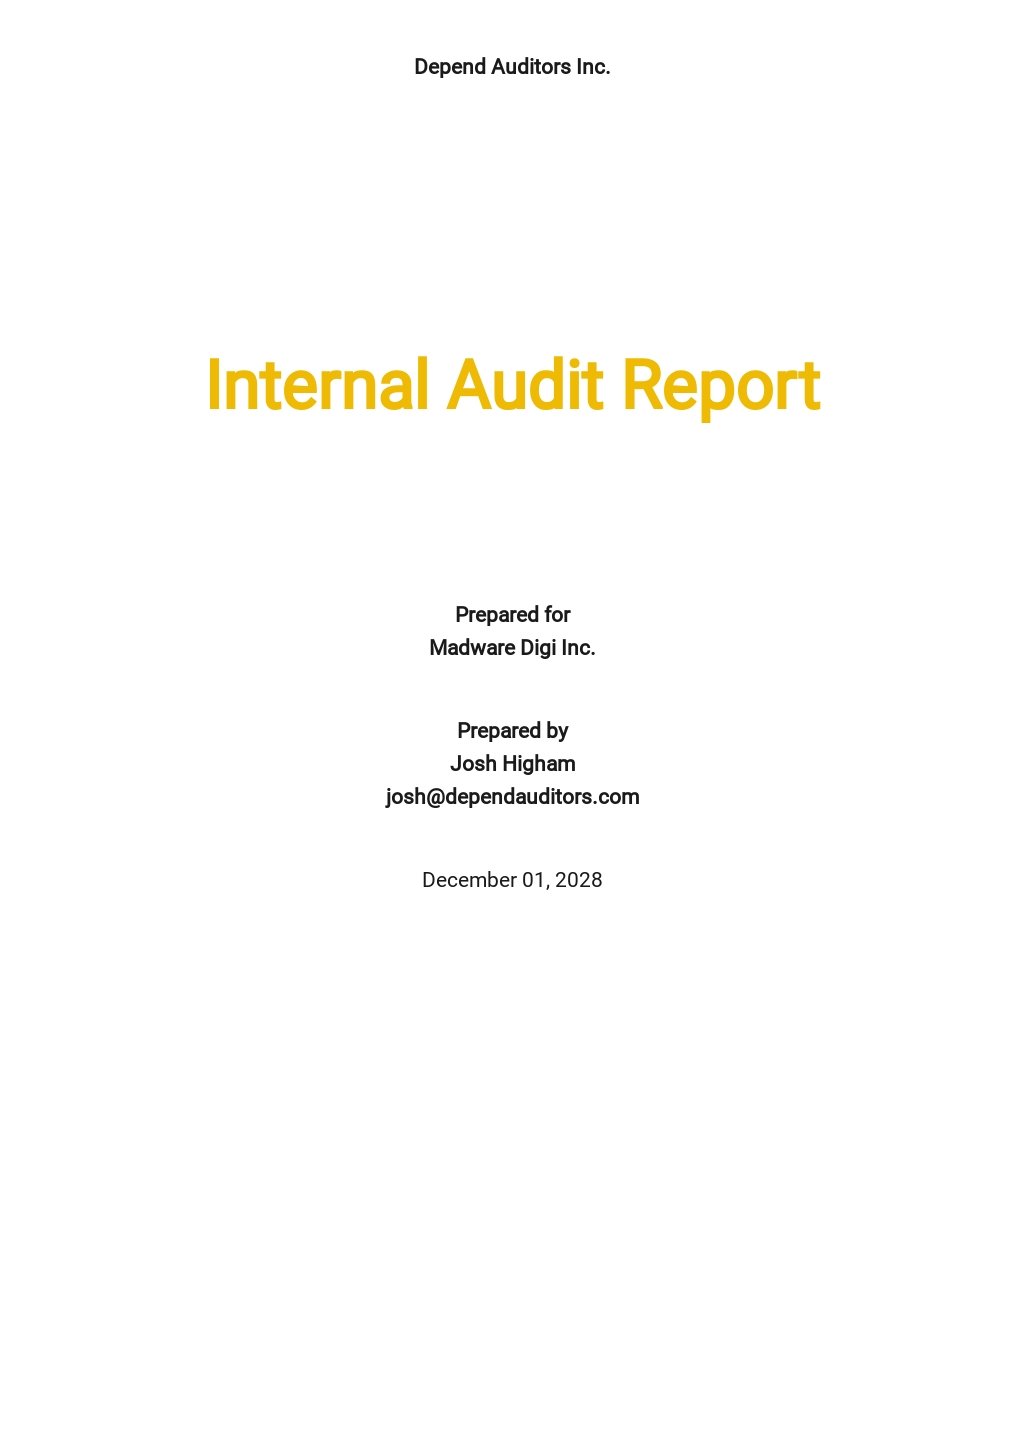 Free Internal Audit Report Template.jpe